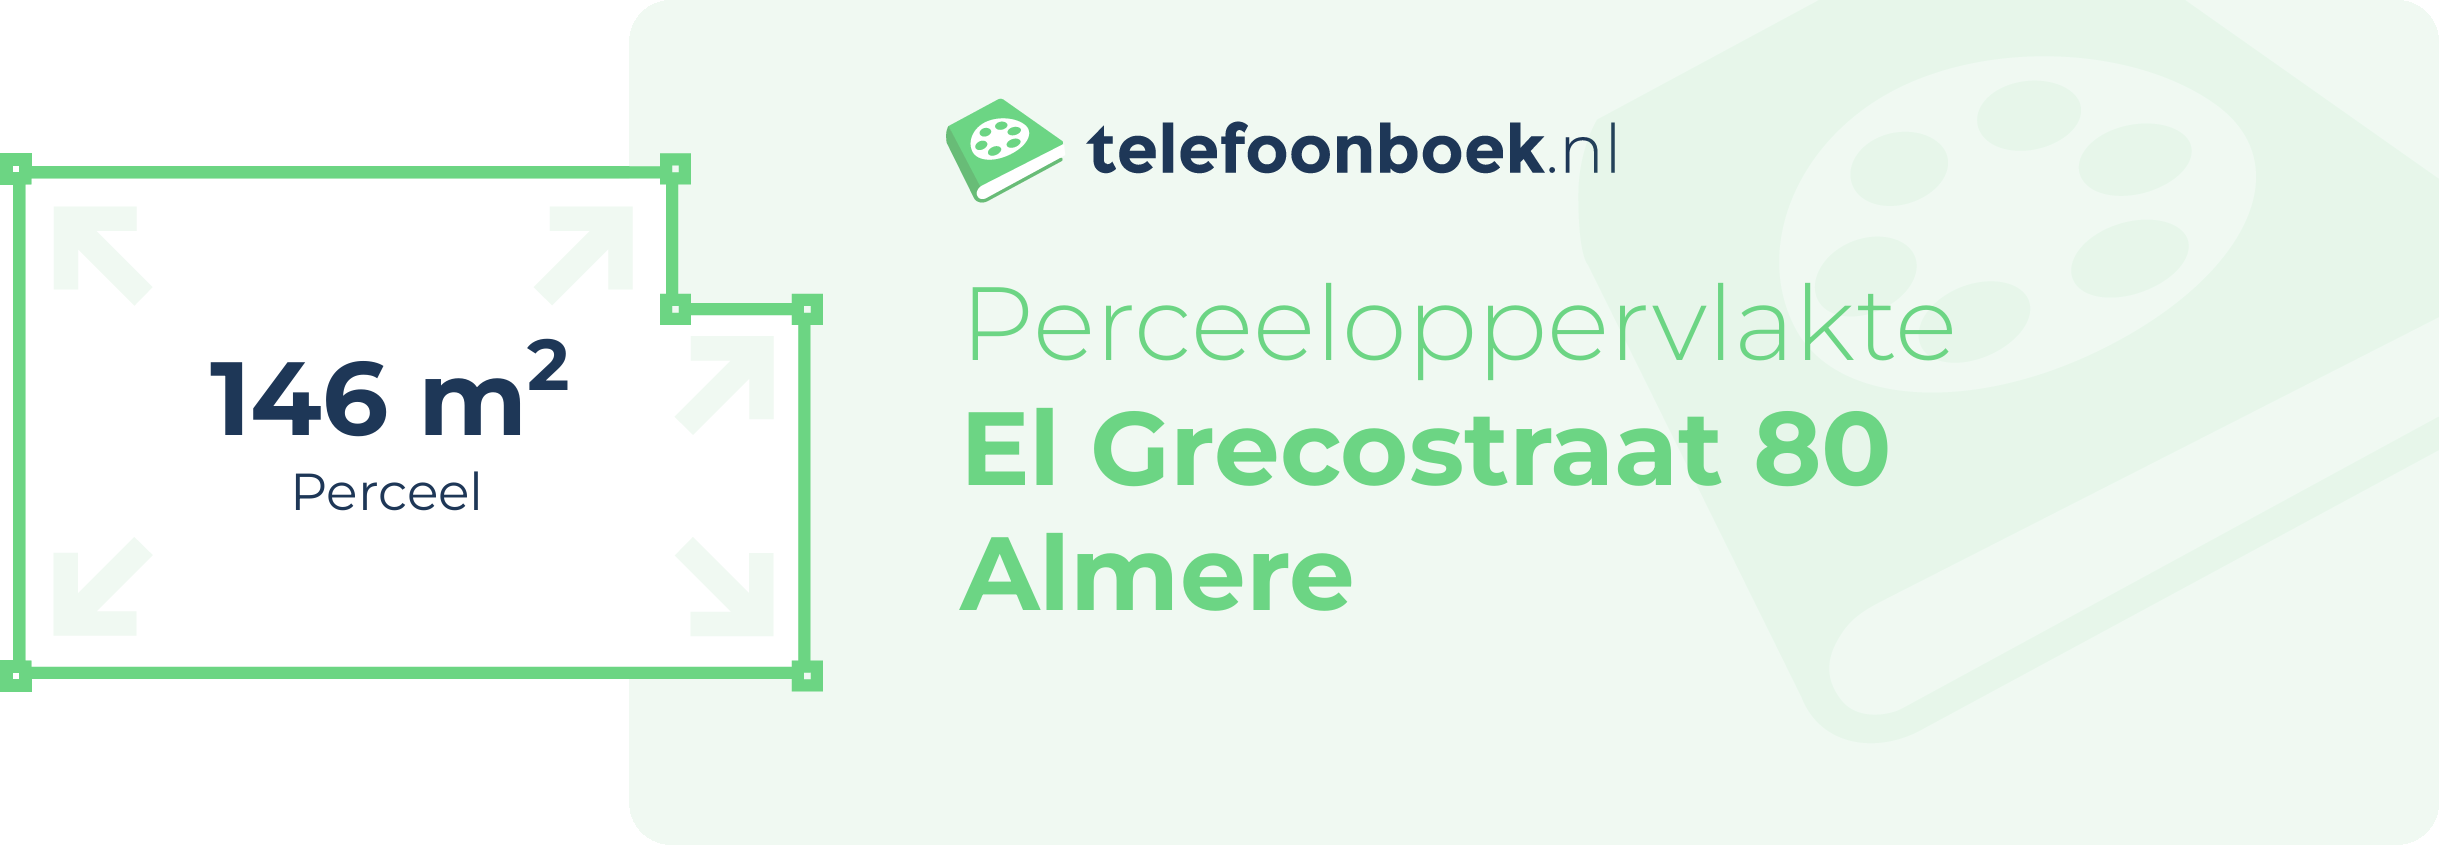 Perceeloppervlakte El Grecostraat 80 Almere